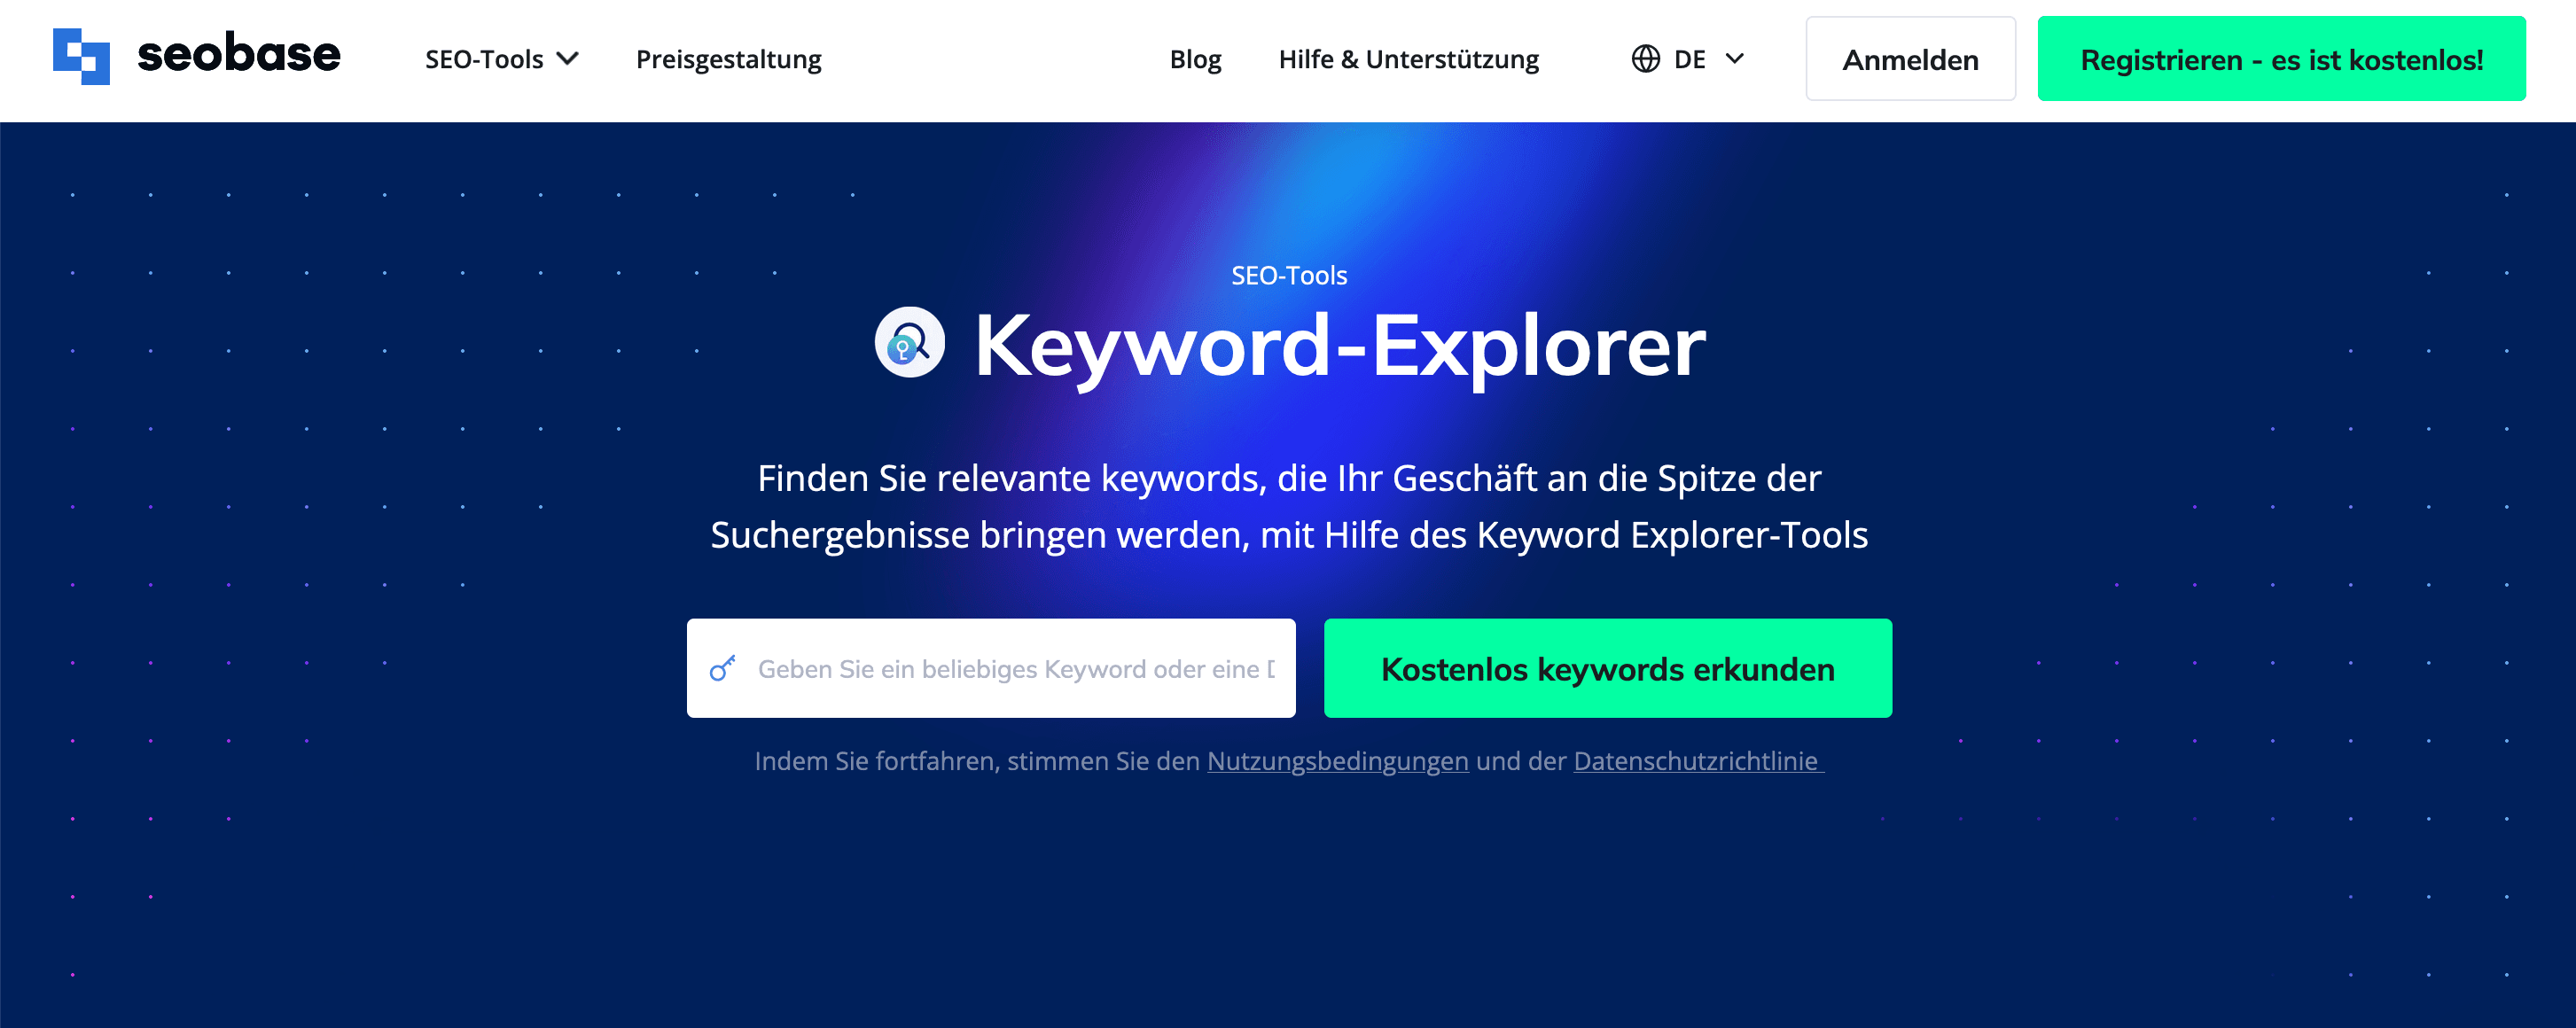 Keyword_Explorer_Tool_-_Finden_Sie_Keywords_für_Ihre_Website___seobase.png